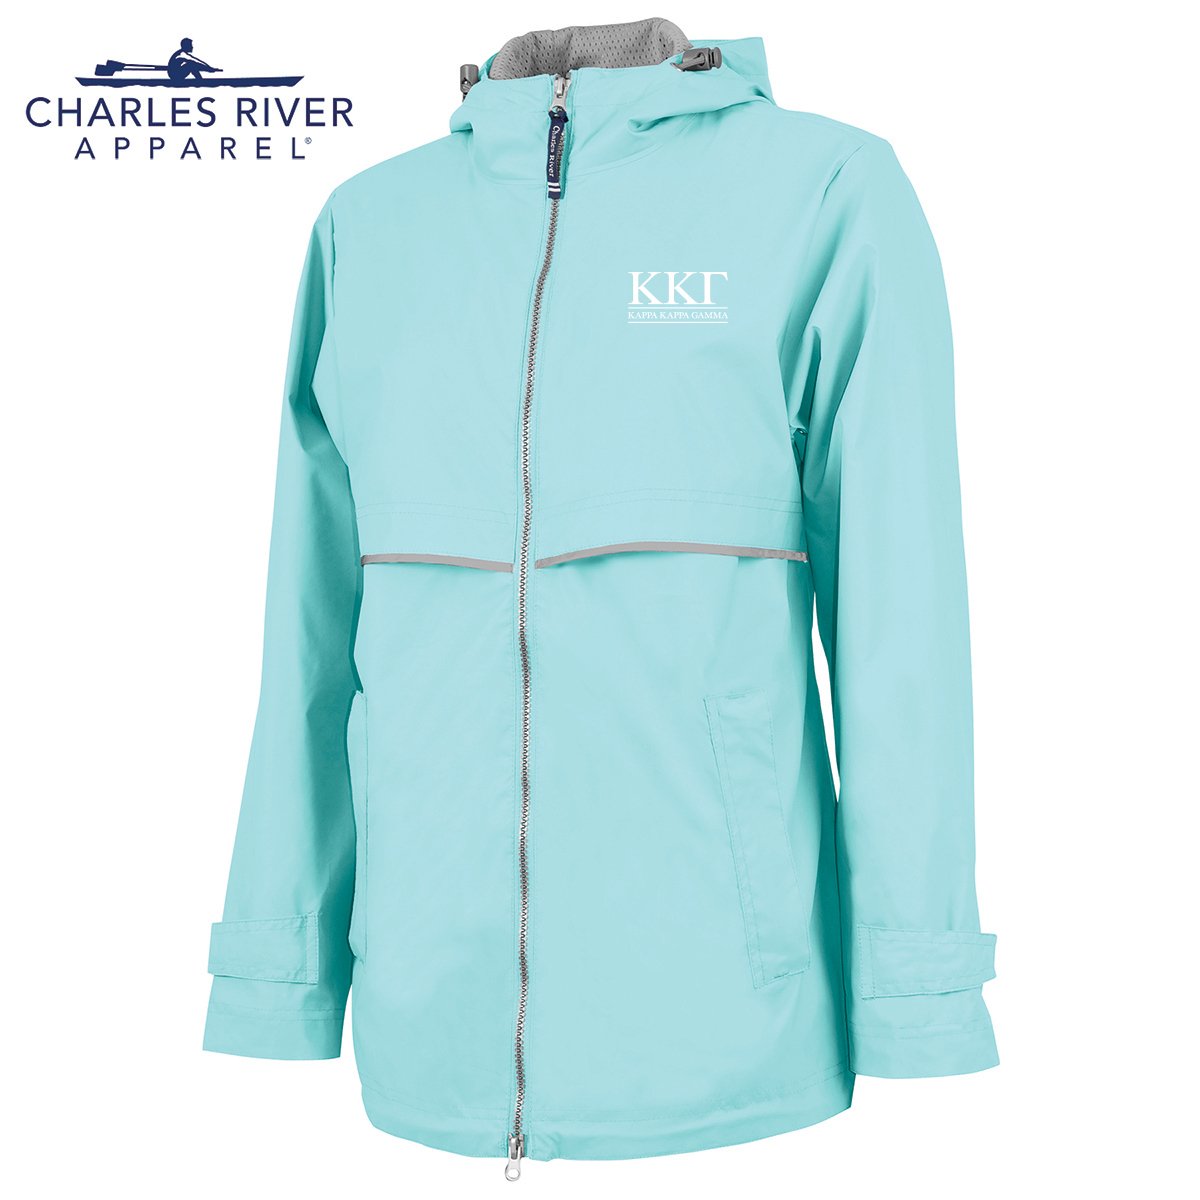 Kappa Charles River Aqua Rain Jacket | Kappa Kappa Gamma | Outerwear > Jackets